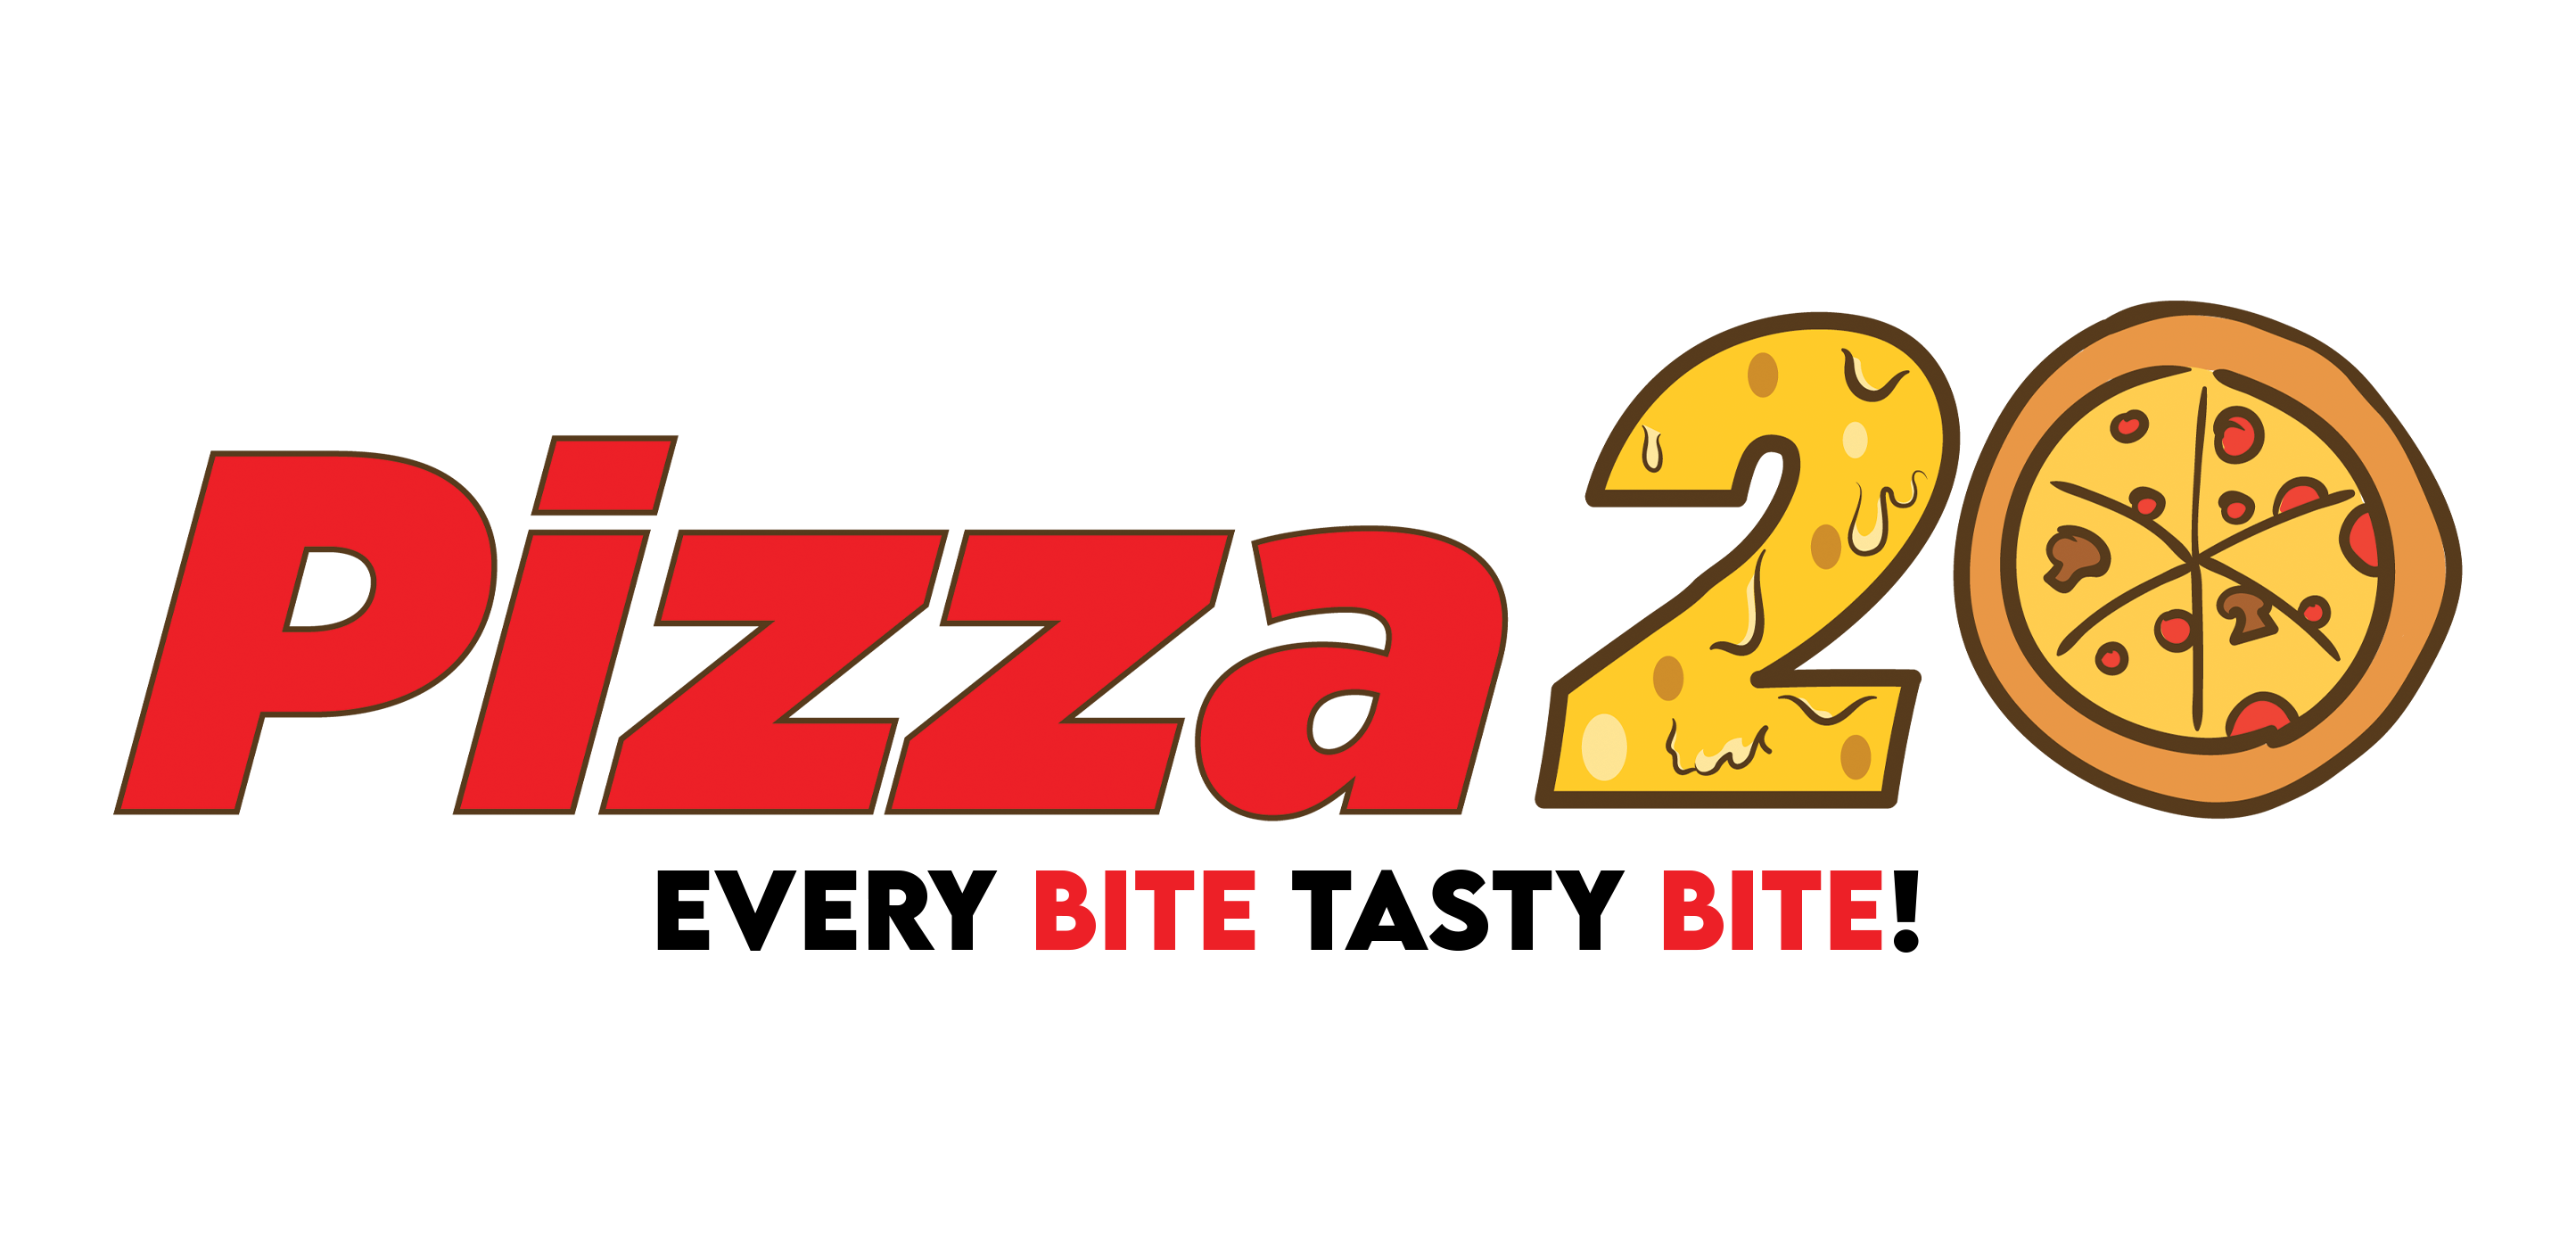 Pizza 20